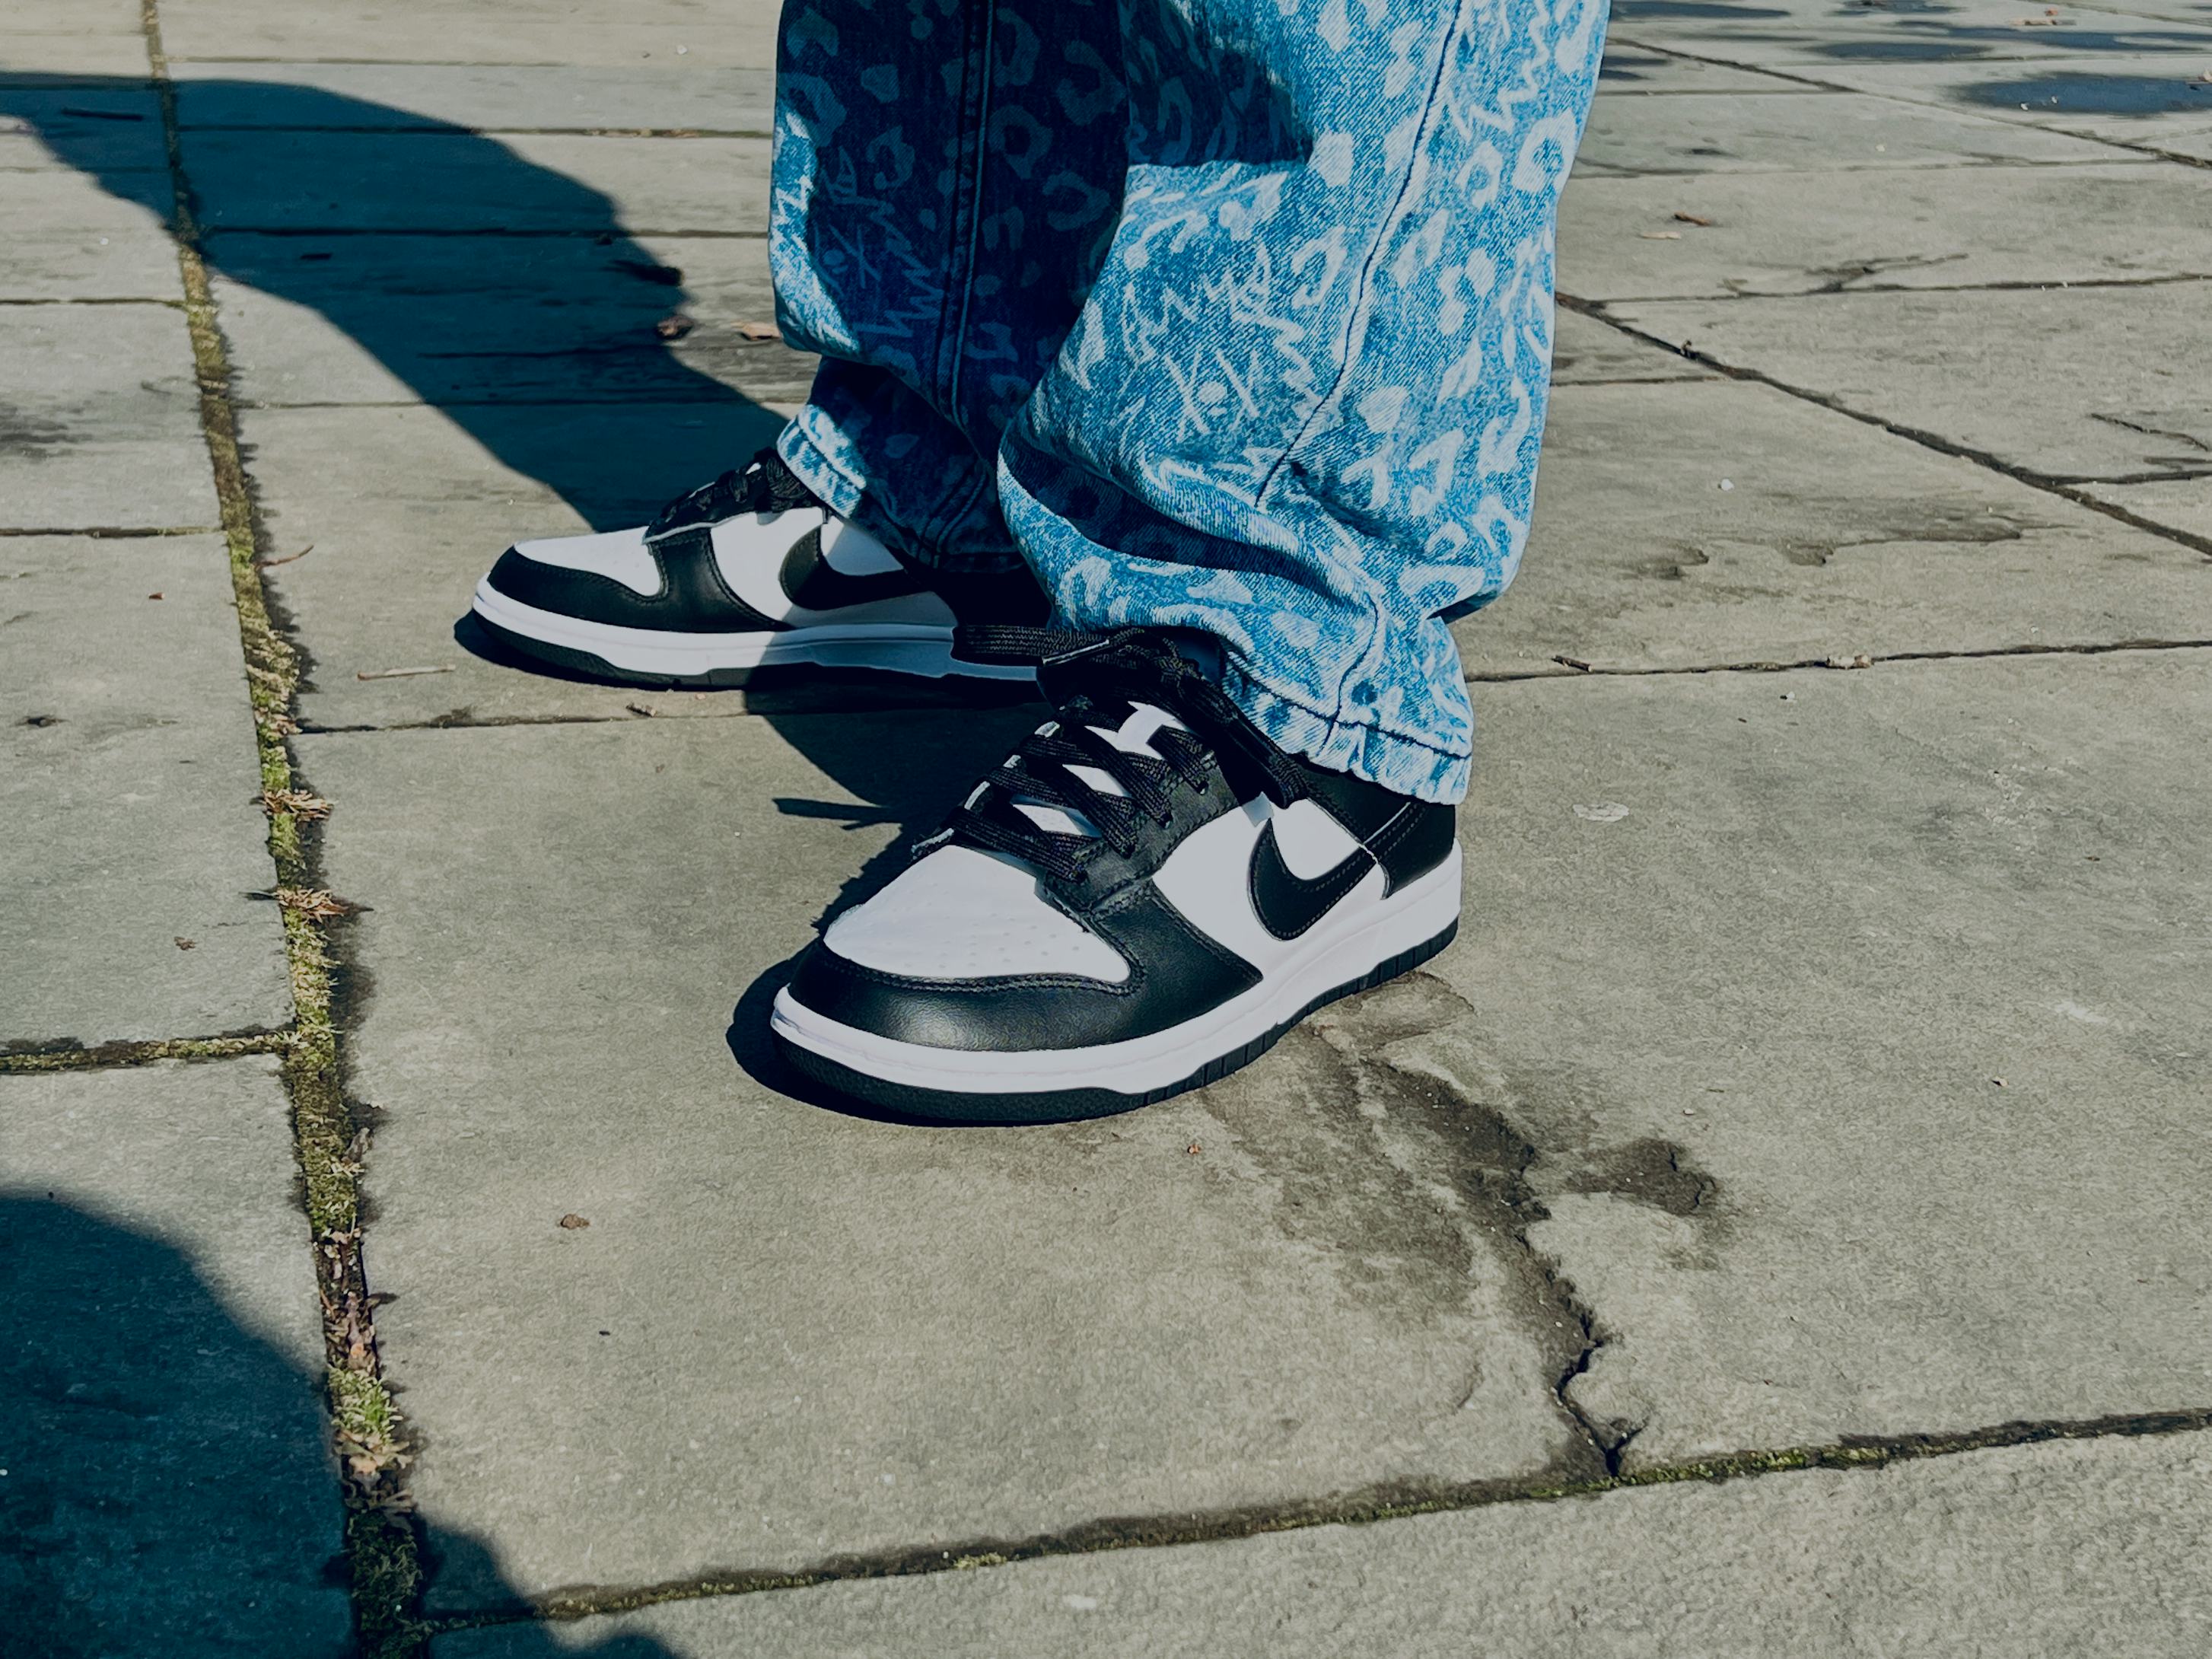 Wearing Nike's Dunk Low 'Black White': We love these panda sneakers